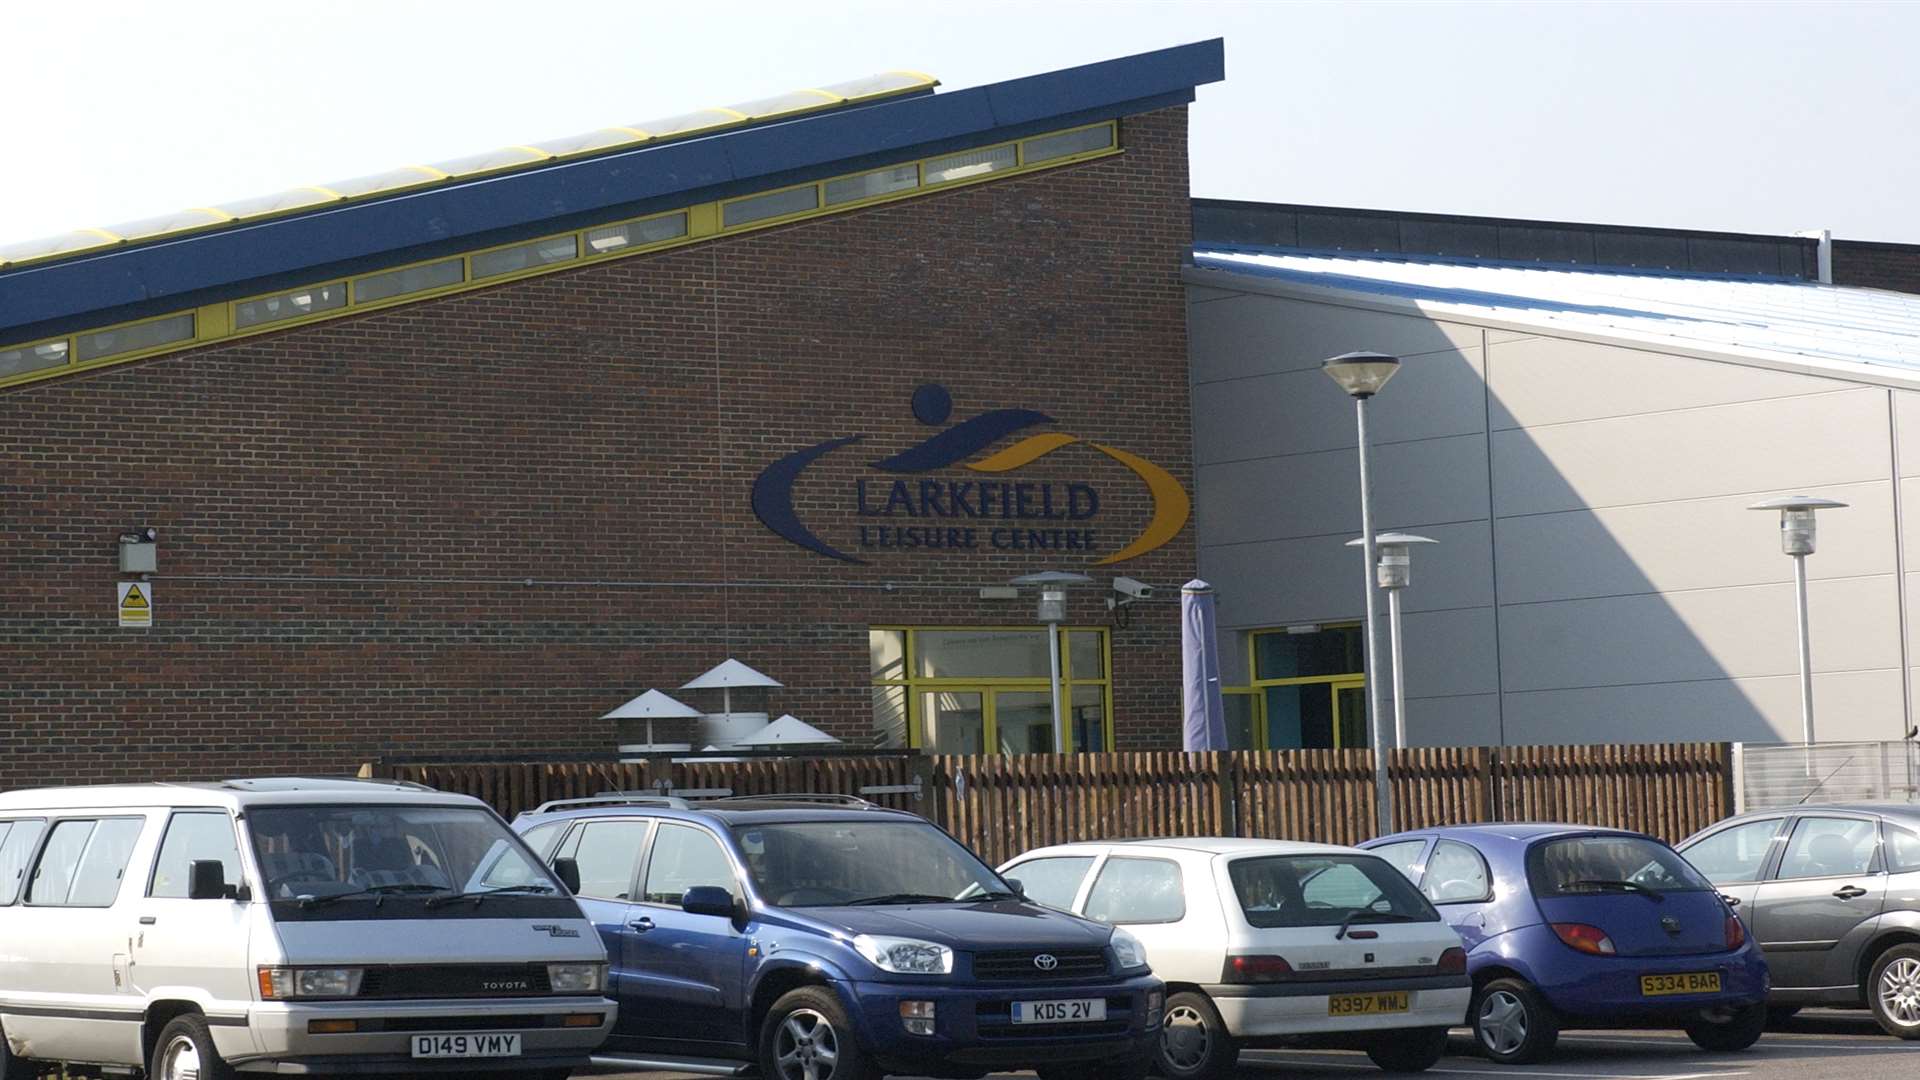 Larkfield Leisure Centre, in New Hythe Lane